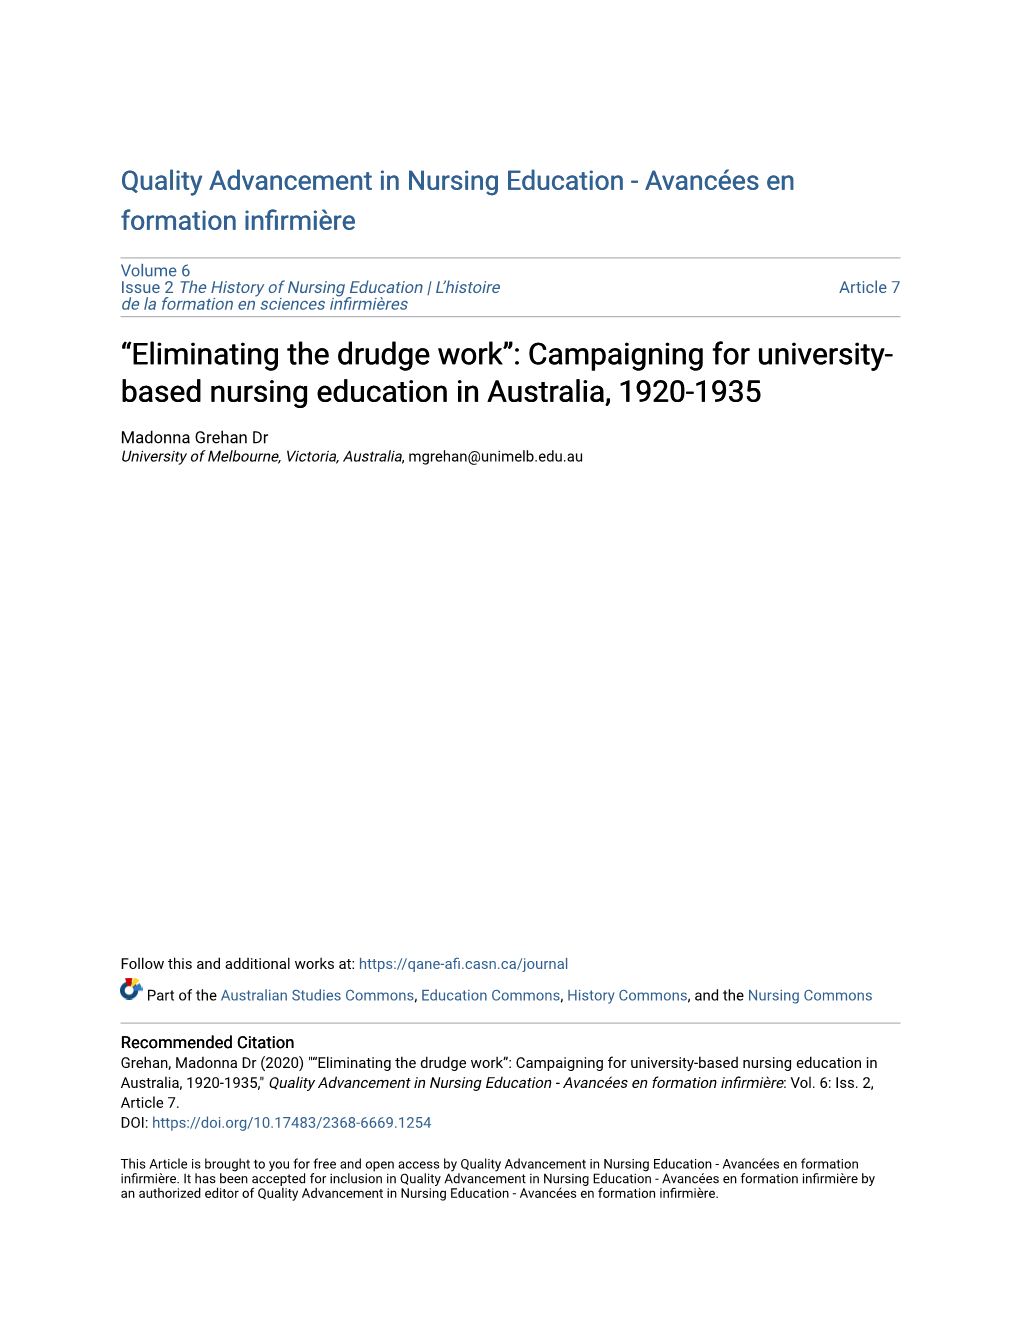 Eliminating the Drudge Work”: Campaigning for University- Based Nursing Education in Australia, 1920-1935